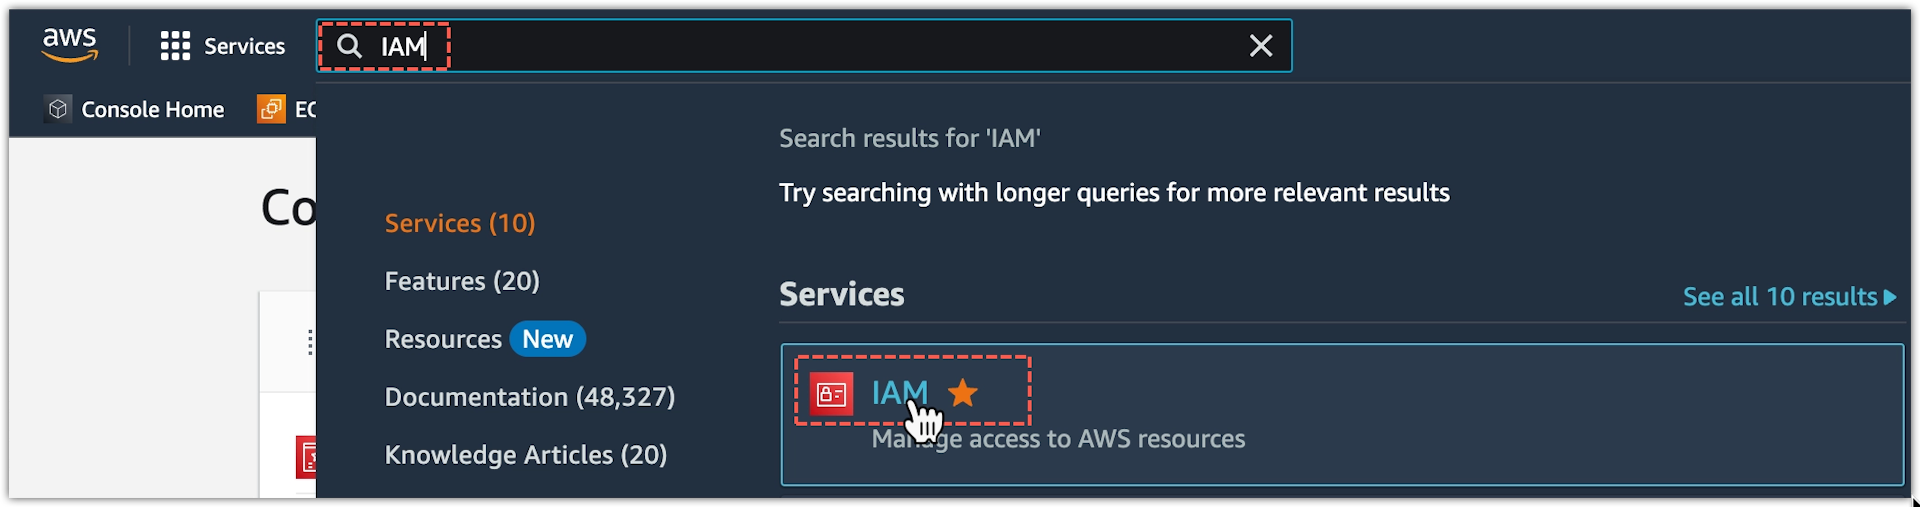 AWS Services - Open IAM